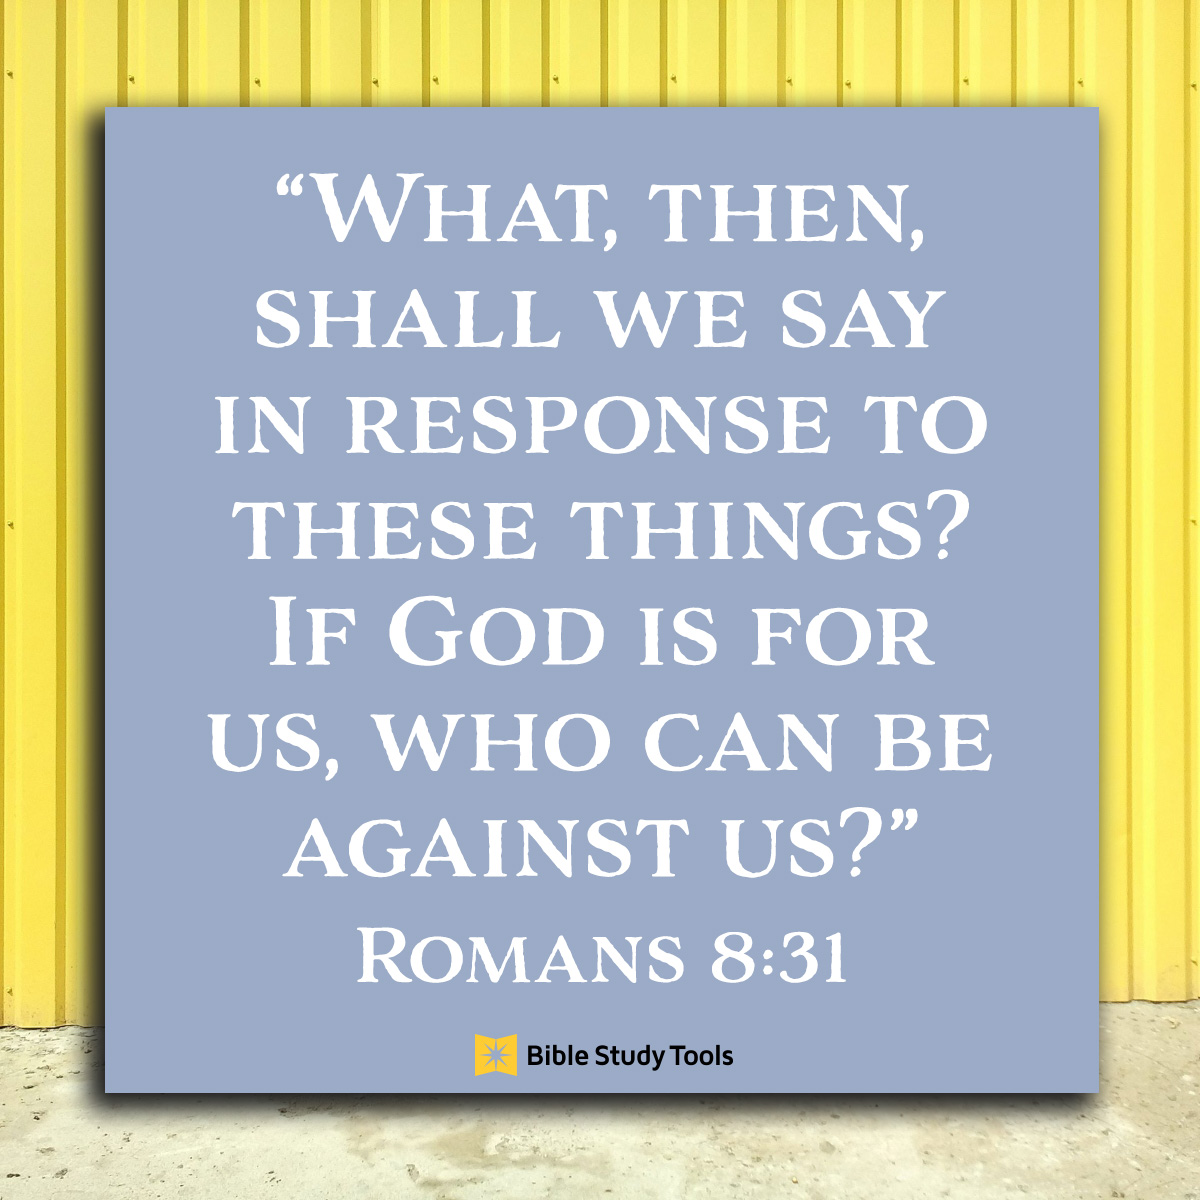 Romans 8:31, inspirational image